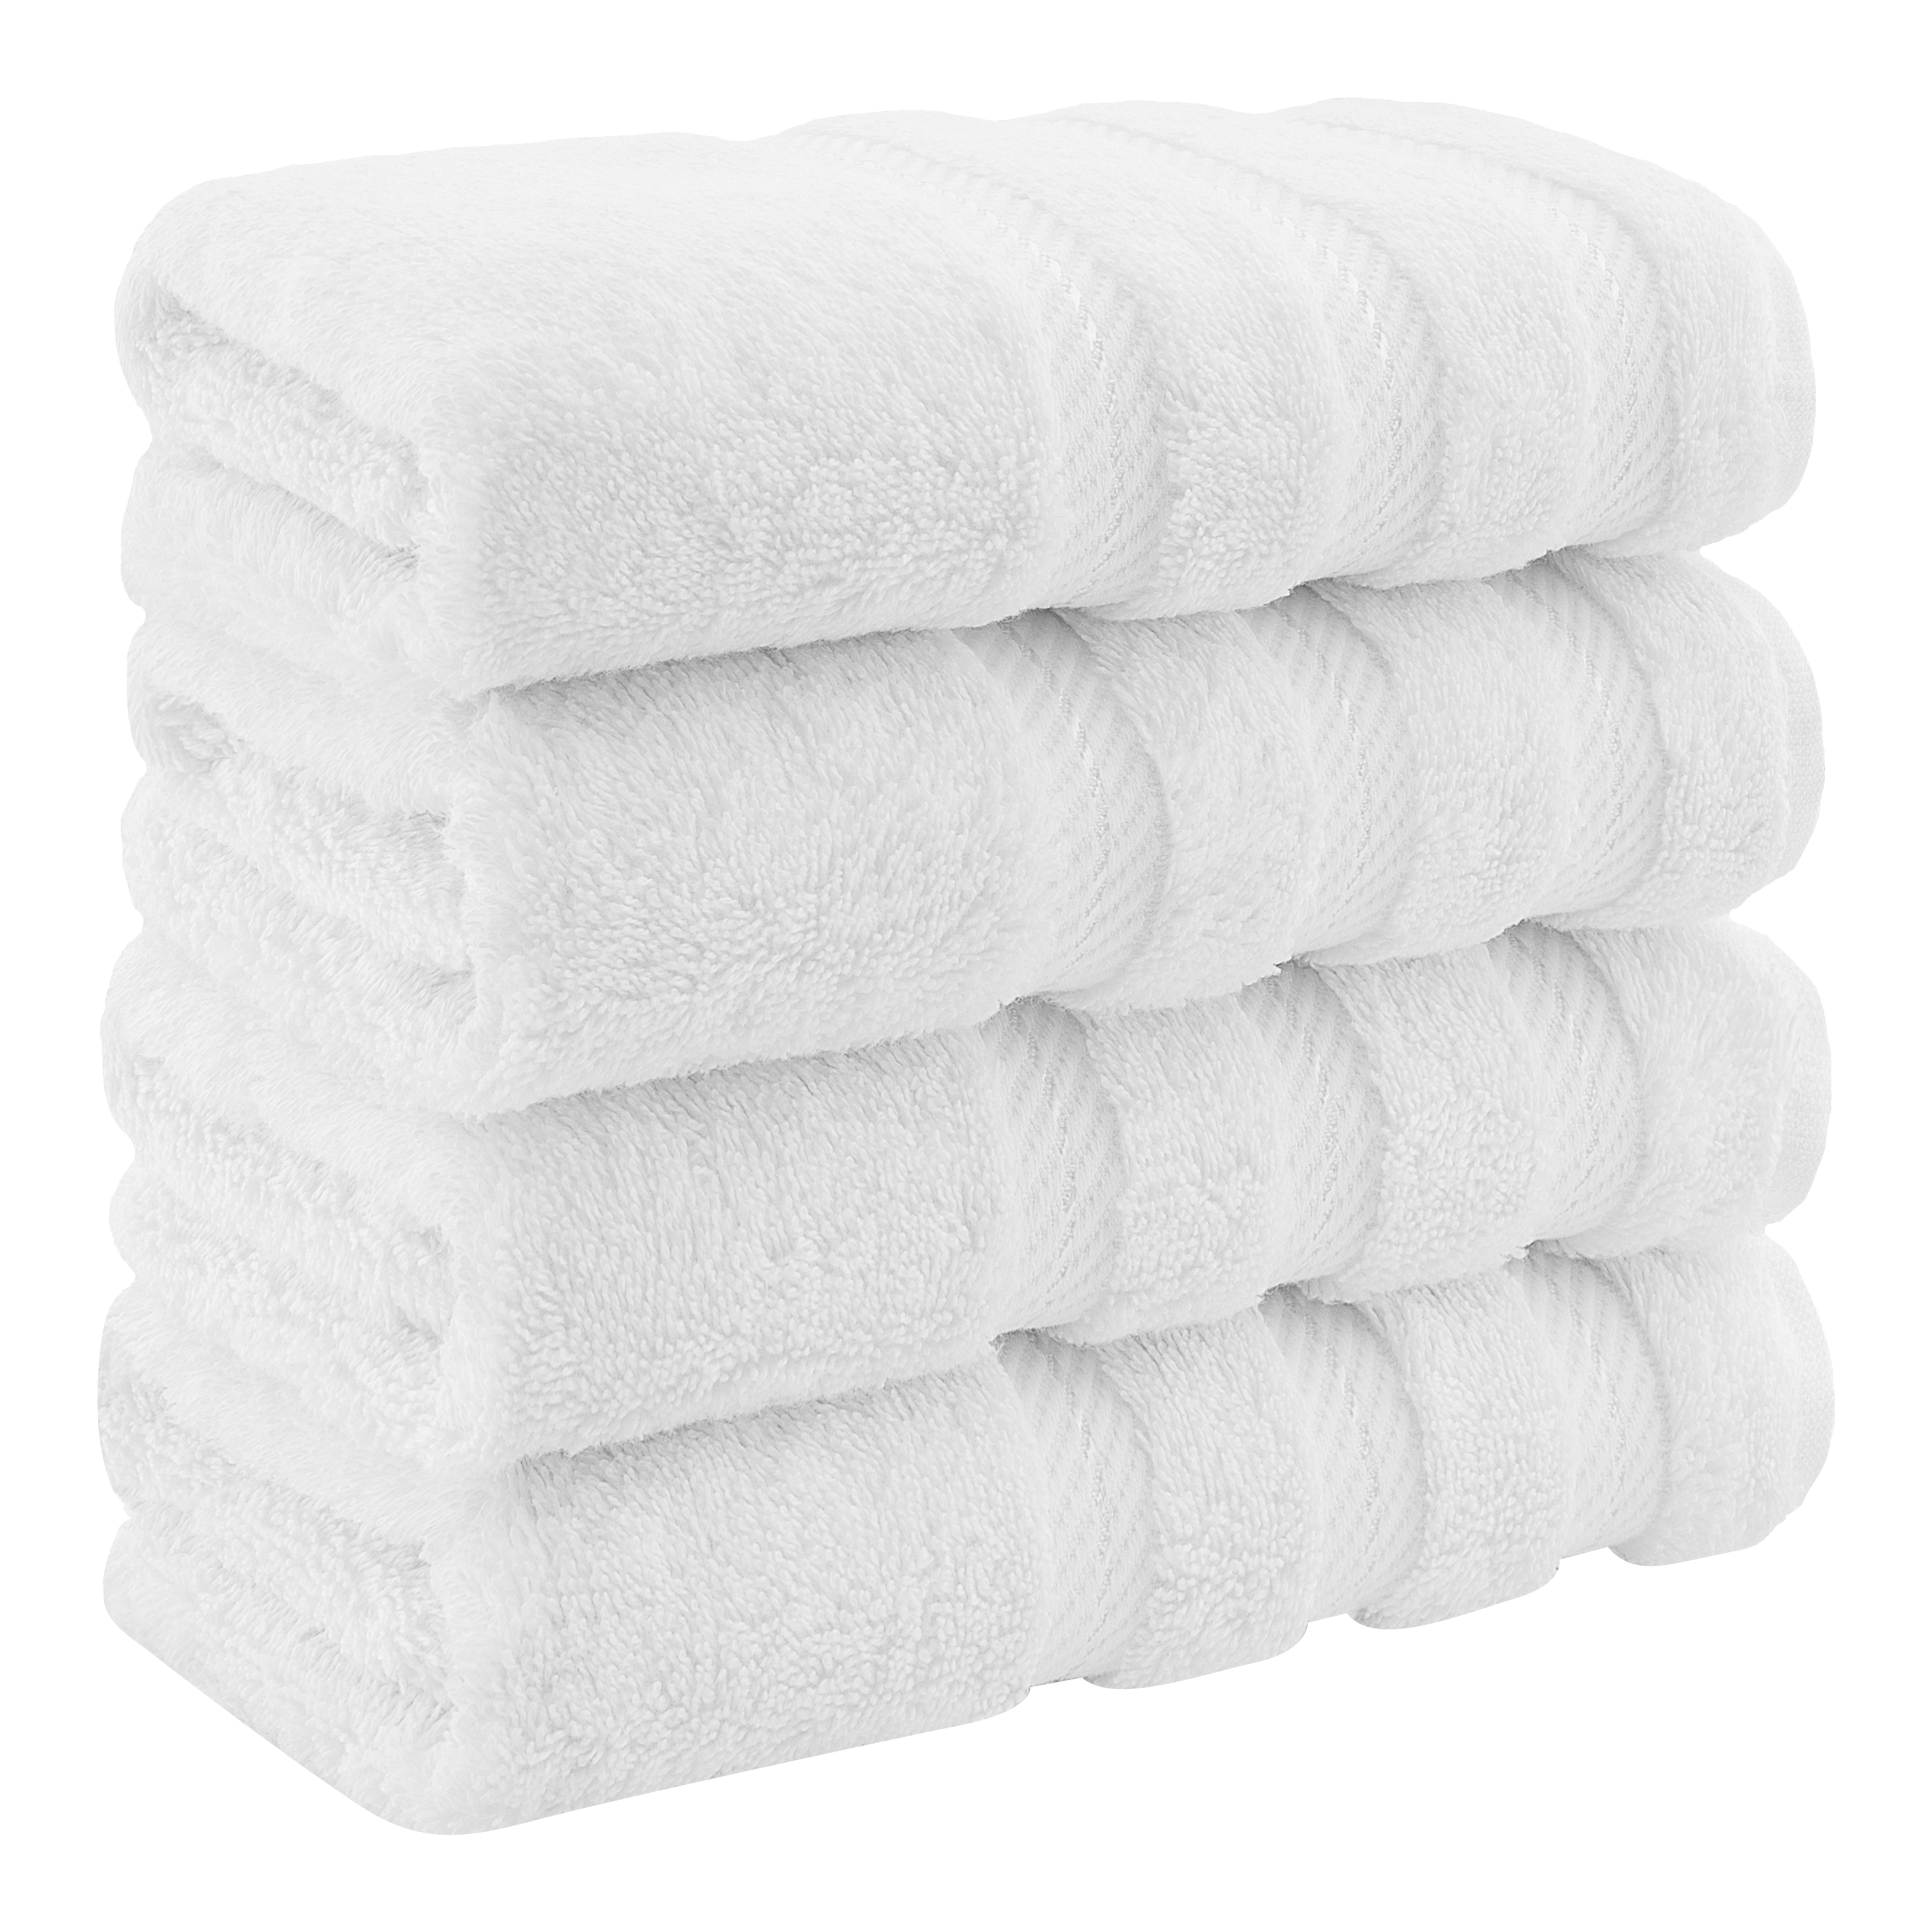 https://ak1.ostkcdn.com/images/products/is/images/direct/1c635439dcdcef475ff0e19b8a744353f1396976/American-Soft-Linen-4-Piece-Turkish-Hand-Towel-Set.jpg